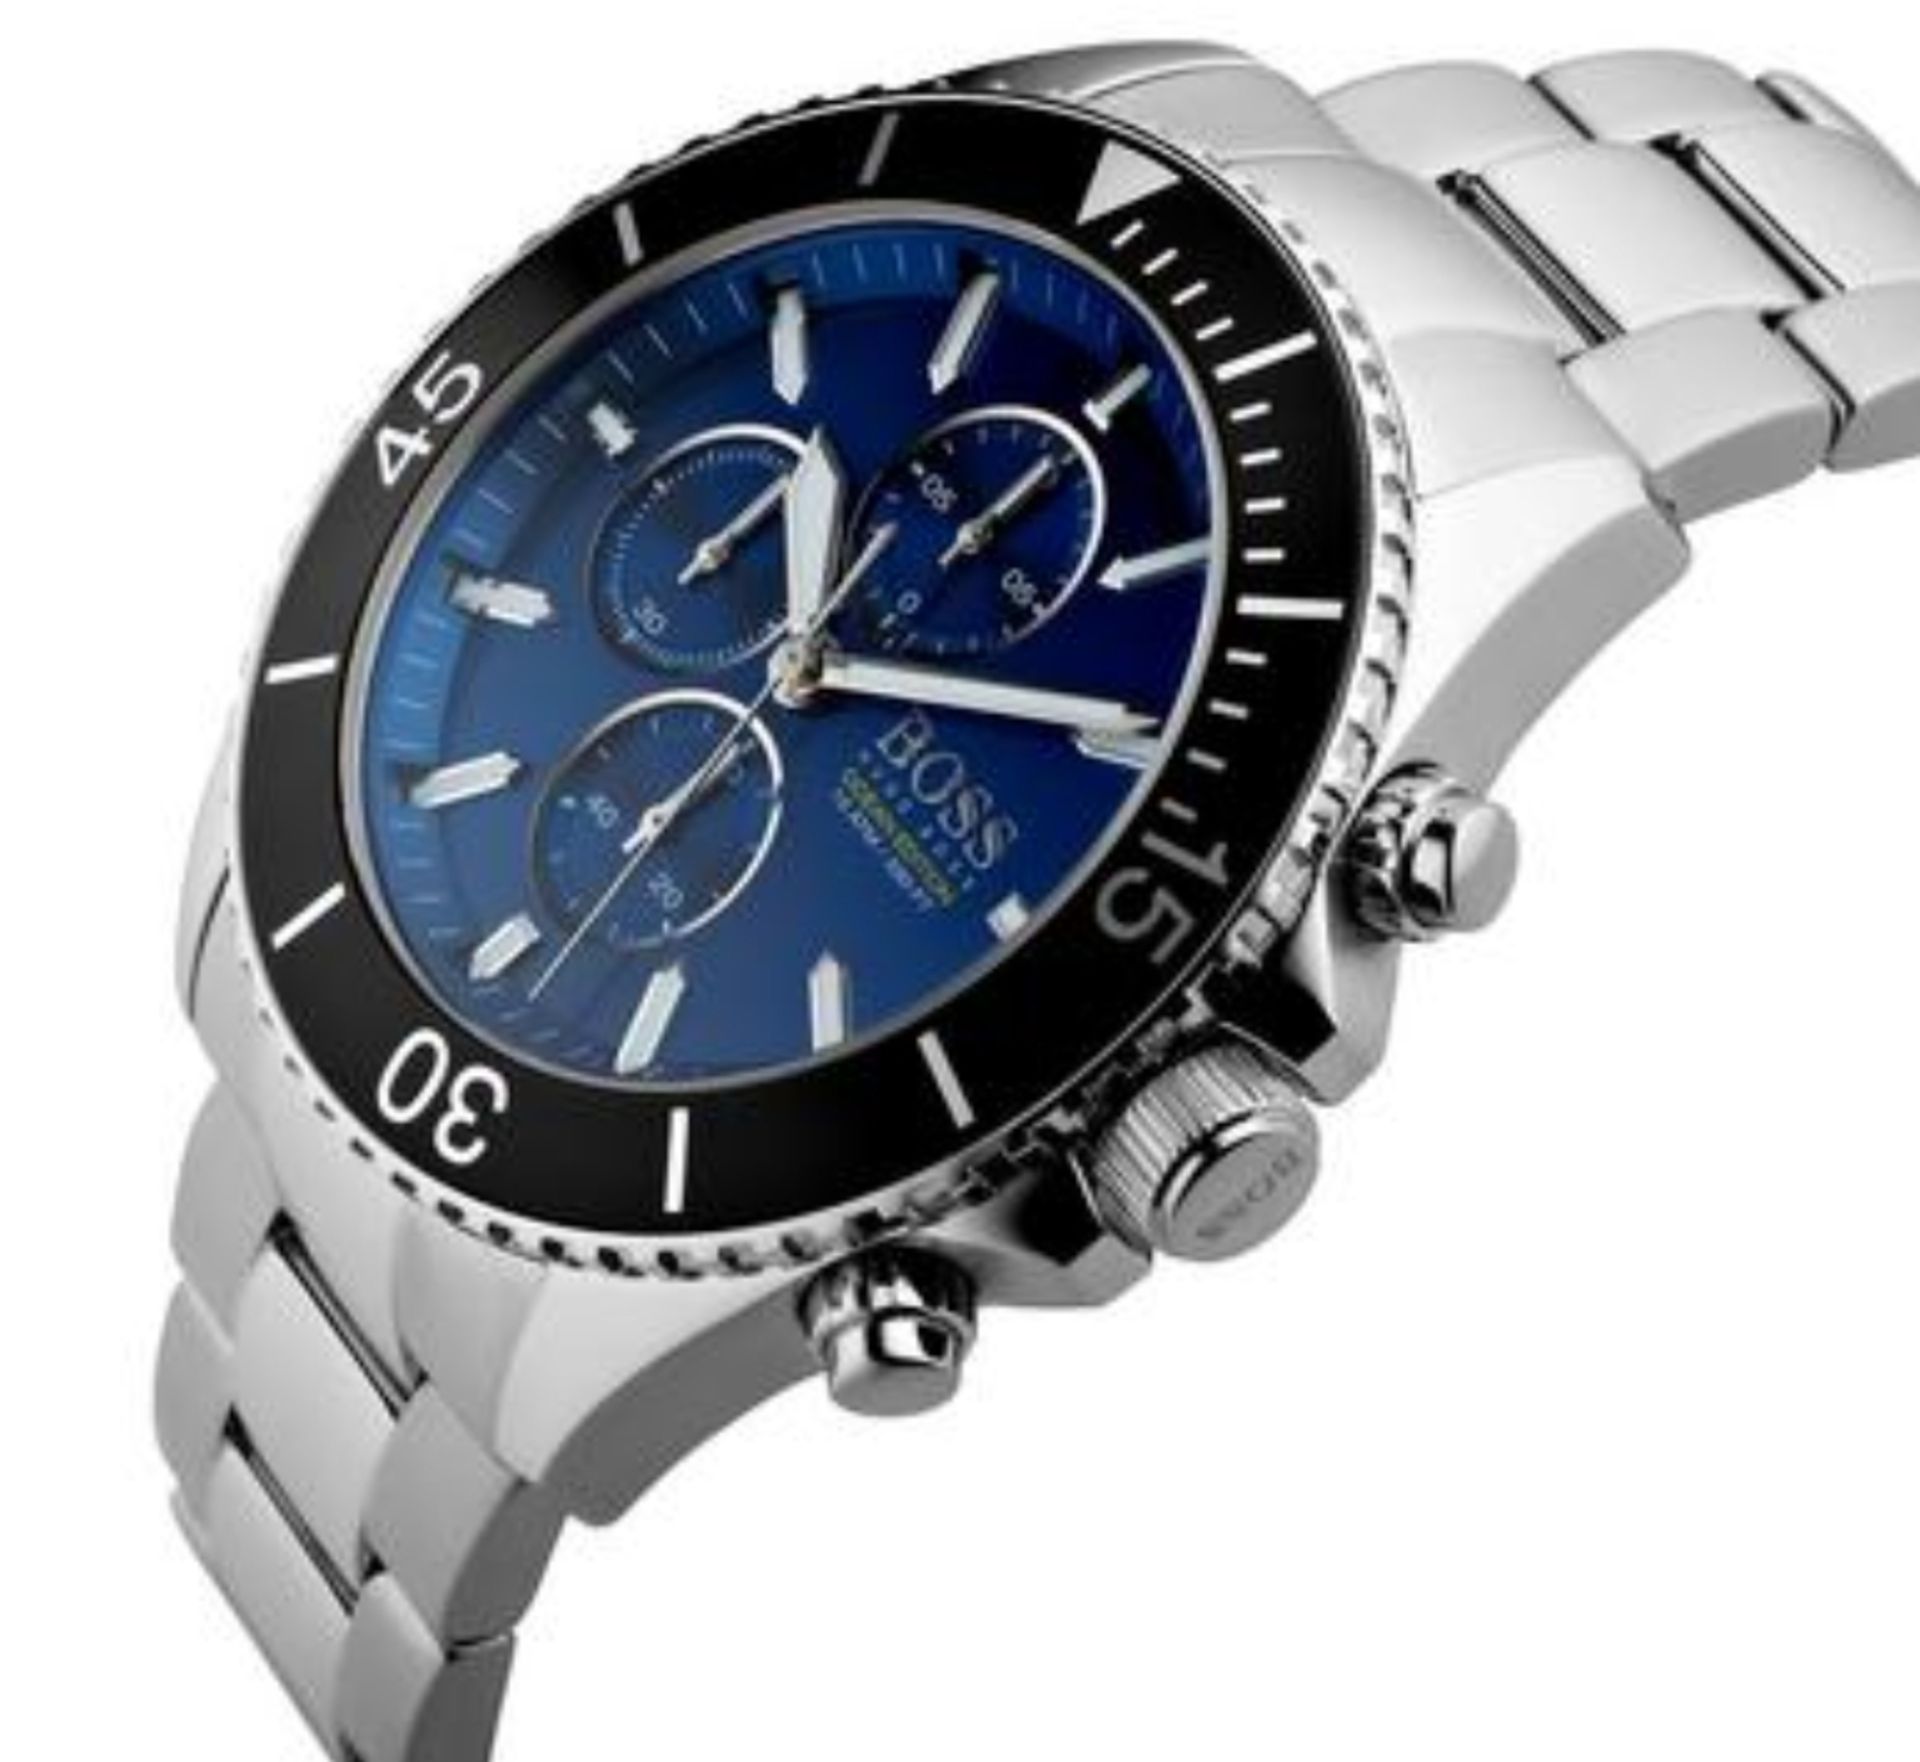 Hugo Boss 1513704 Men's Ocean Edition Blue Dial Silver Bracelet Chronograph Watch - Image 2 of 6